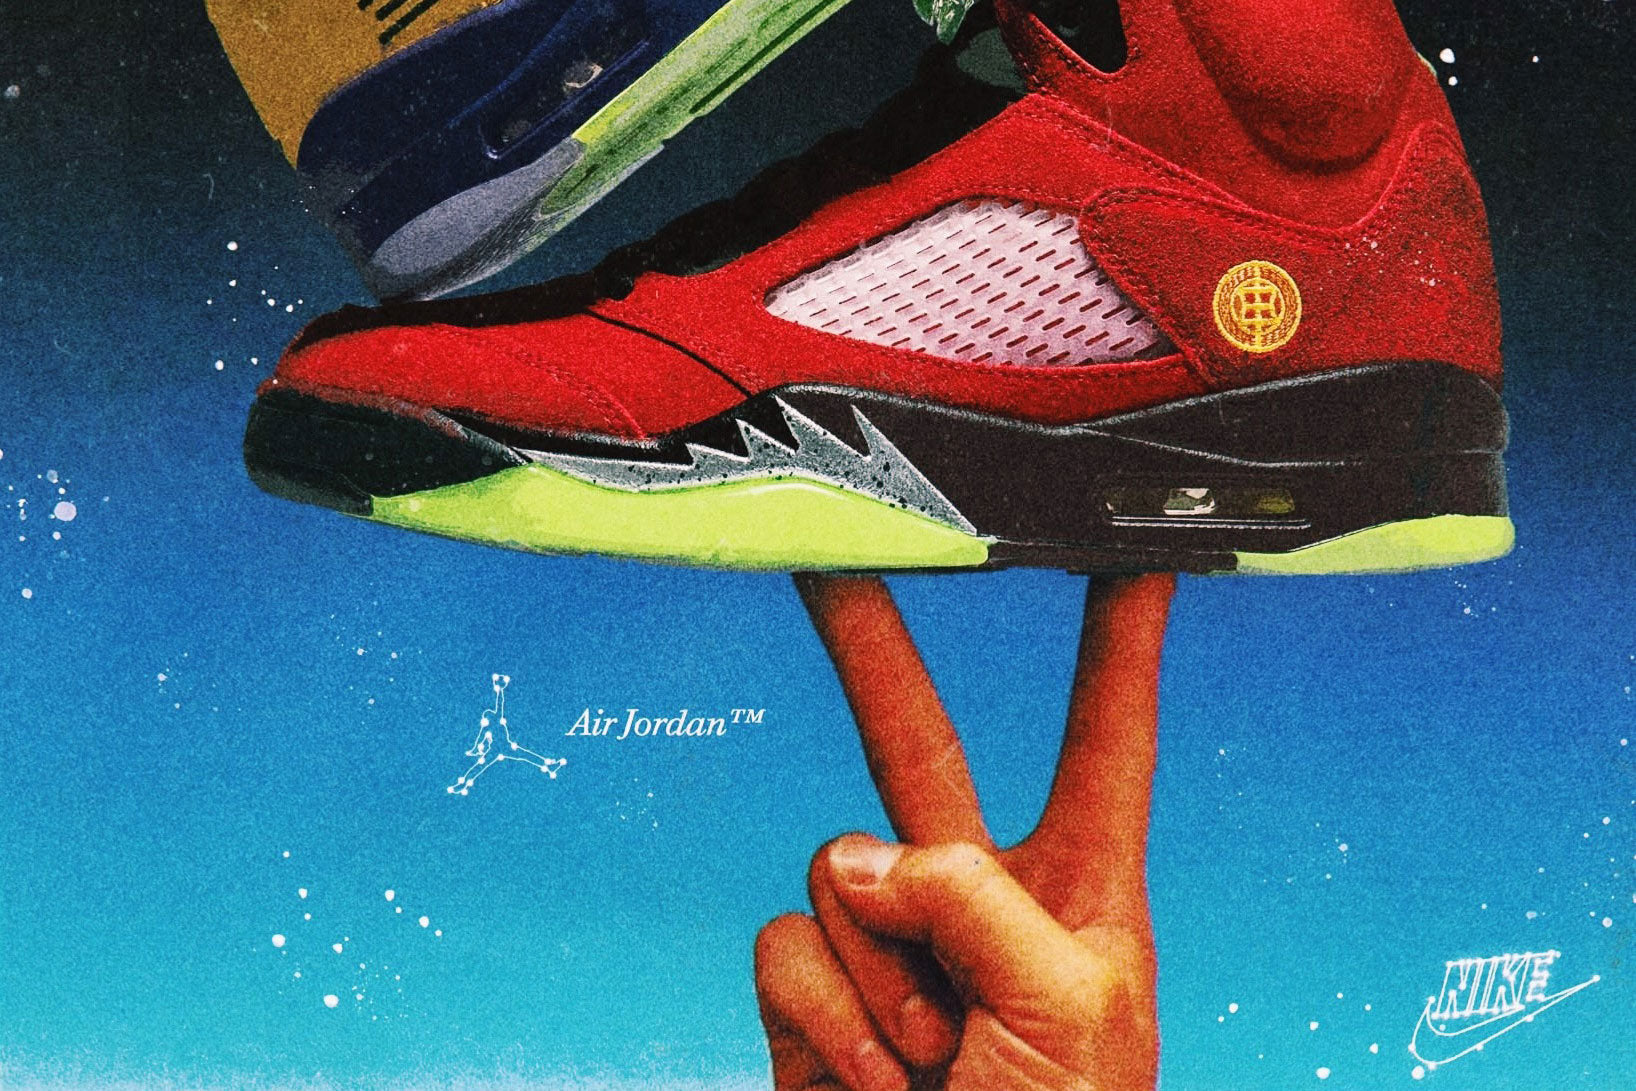 Air Jordan 5 Retro SE "What The" Raffle 11/11/20